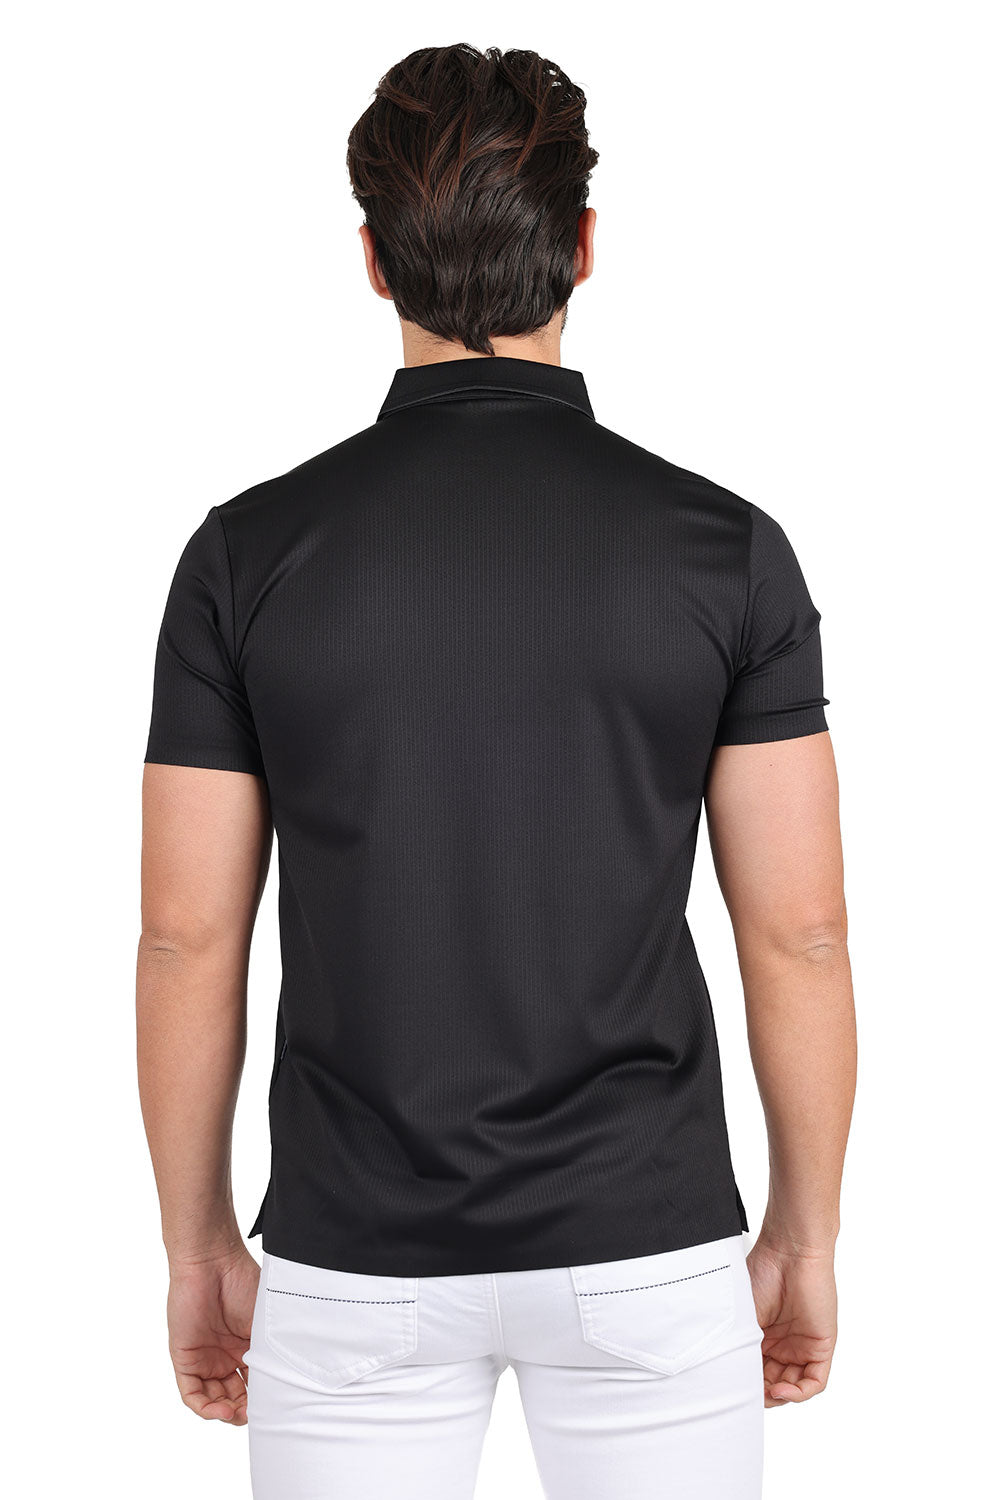 Barabas Men's Soft Silky Cotton Blend Short Sleeve Polo Shirt 2PP829 Black